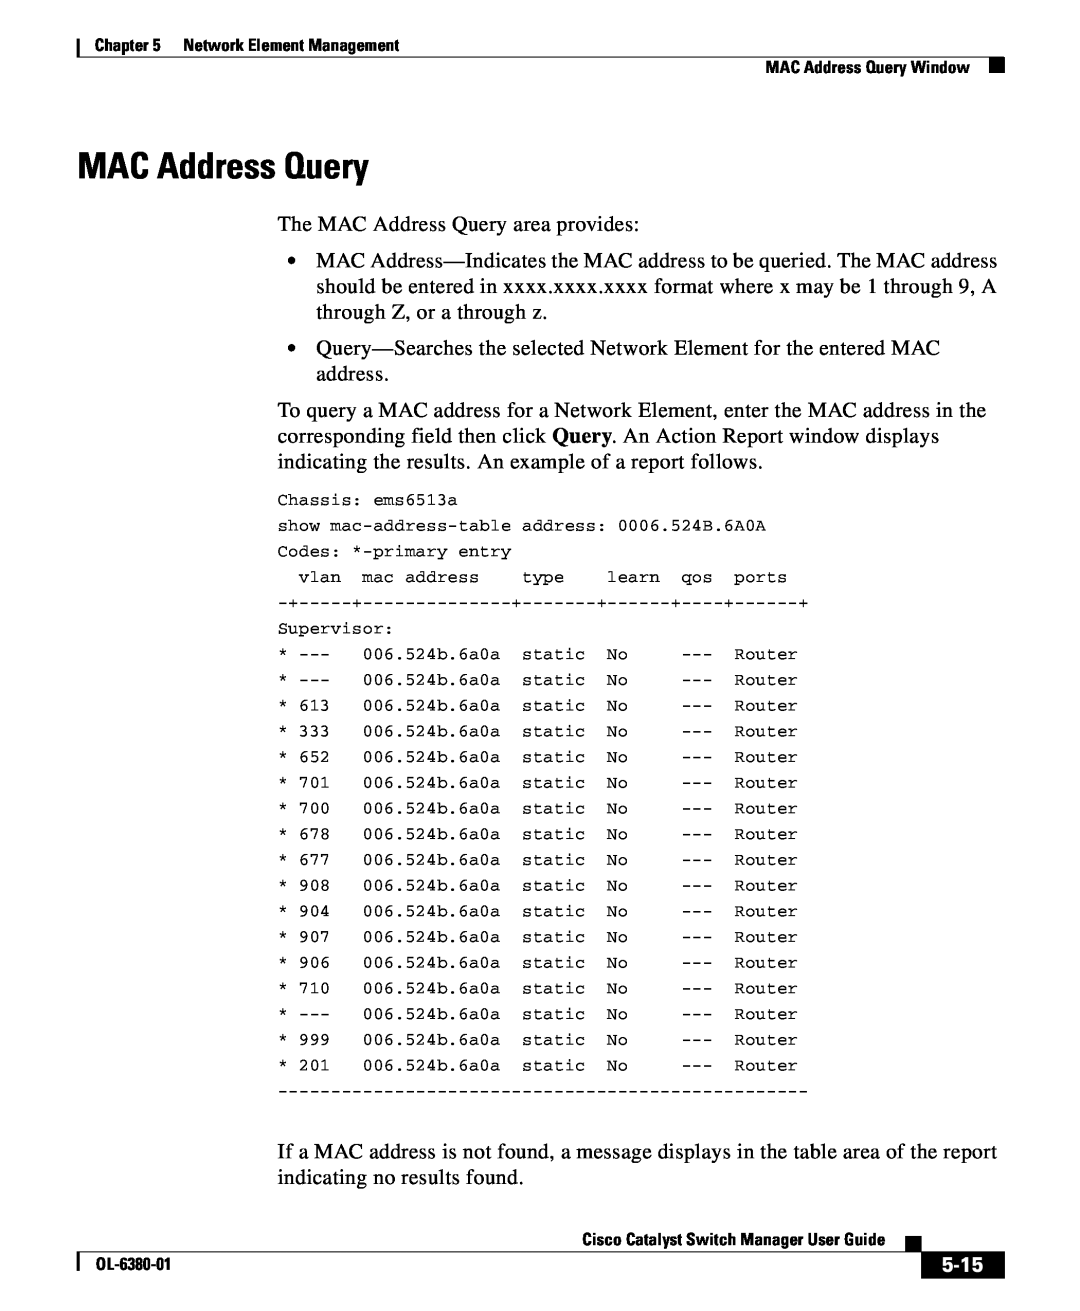 Cisco Systems OL-6380-01 manual MAC Address Query, 5-15 